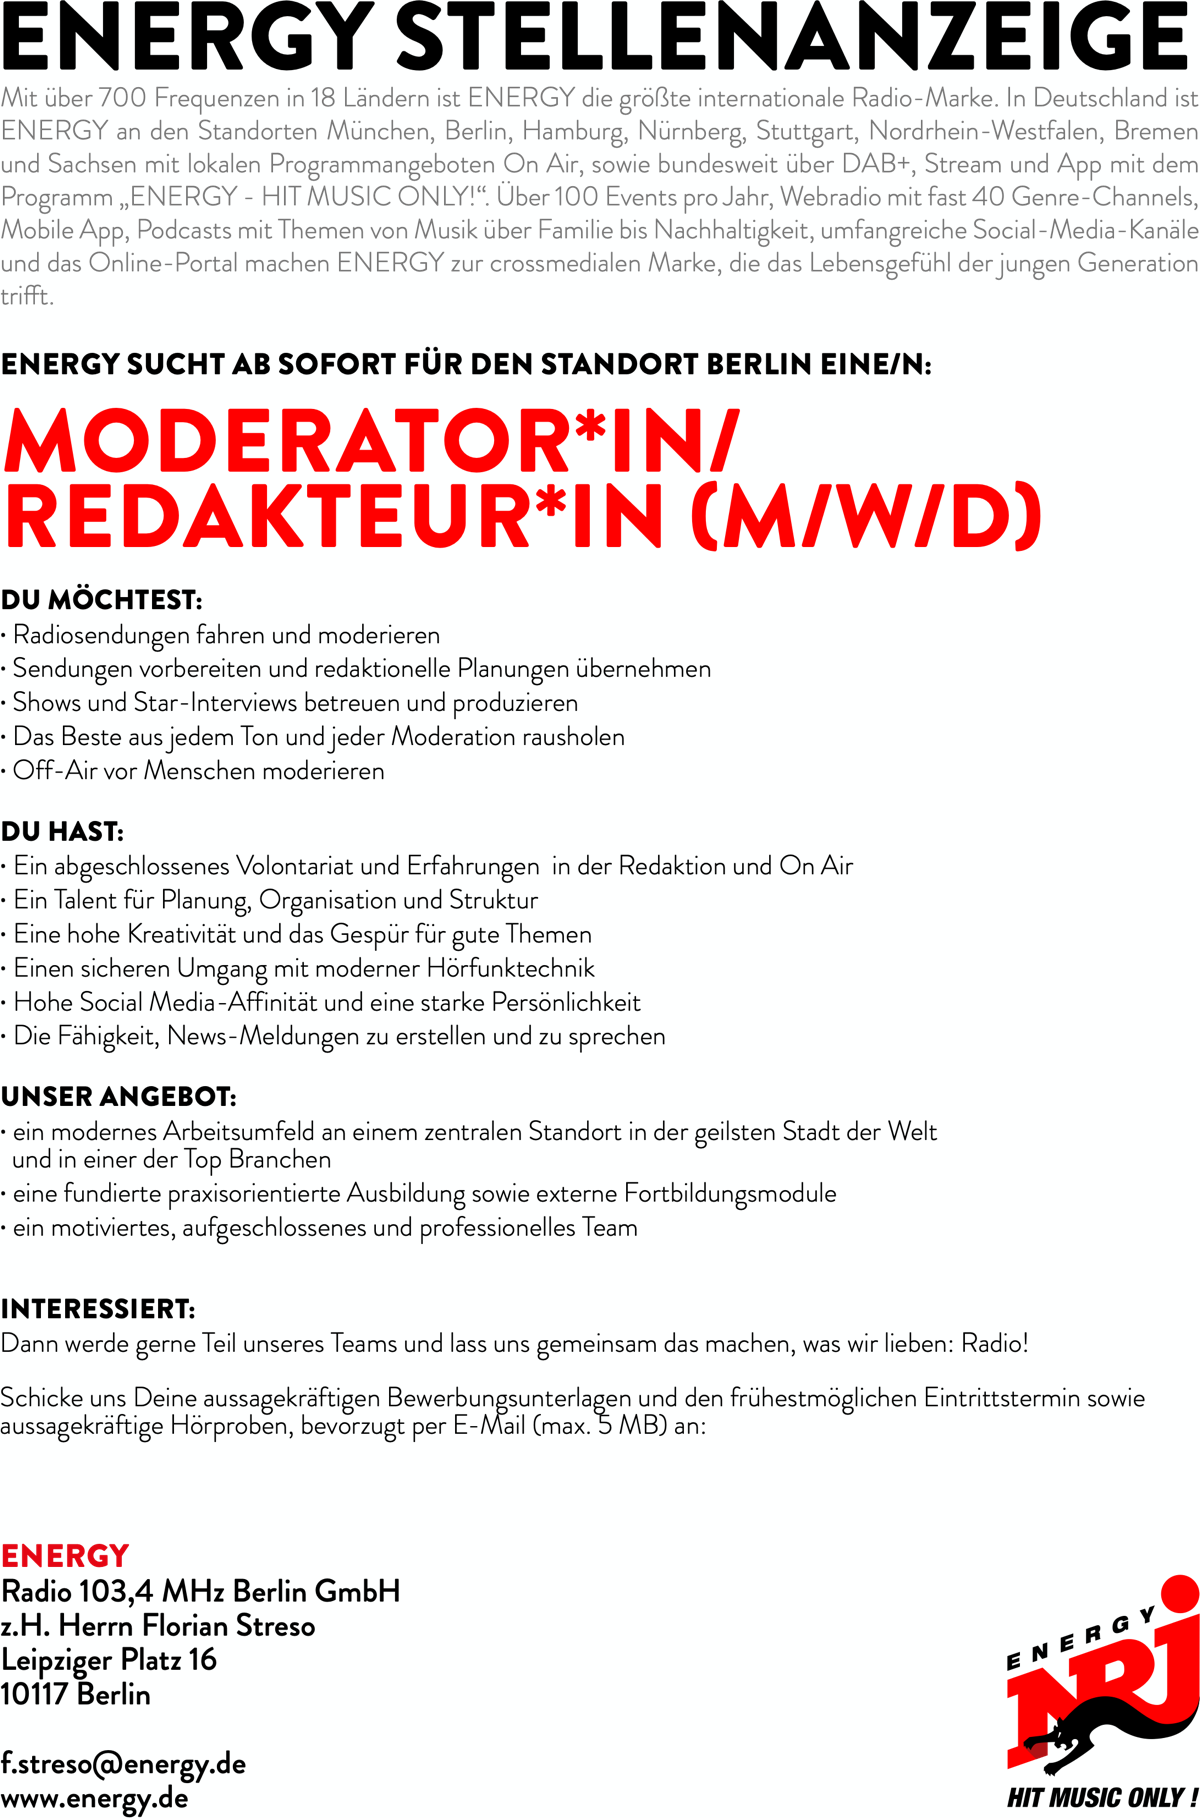 ENERGY Berlin sucht Moderator*in / Redakteur*in (m/w/d)